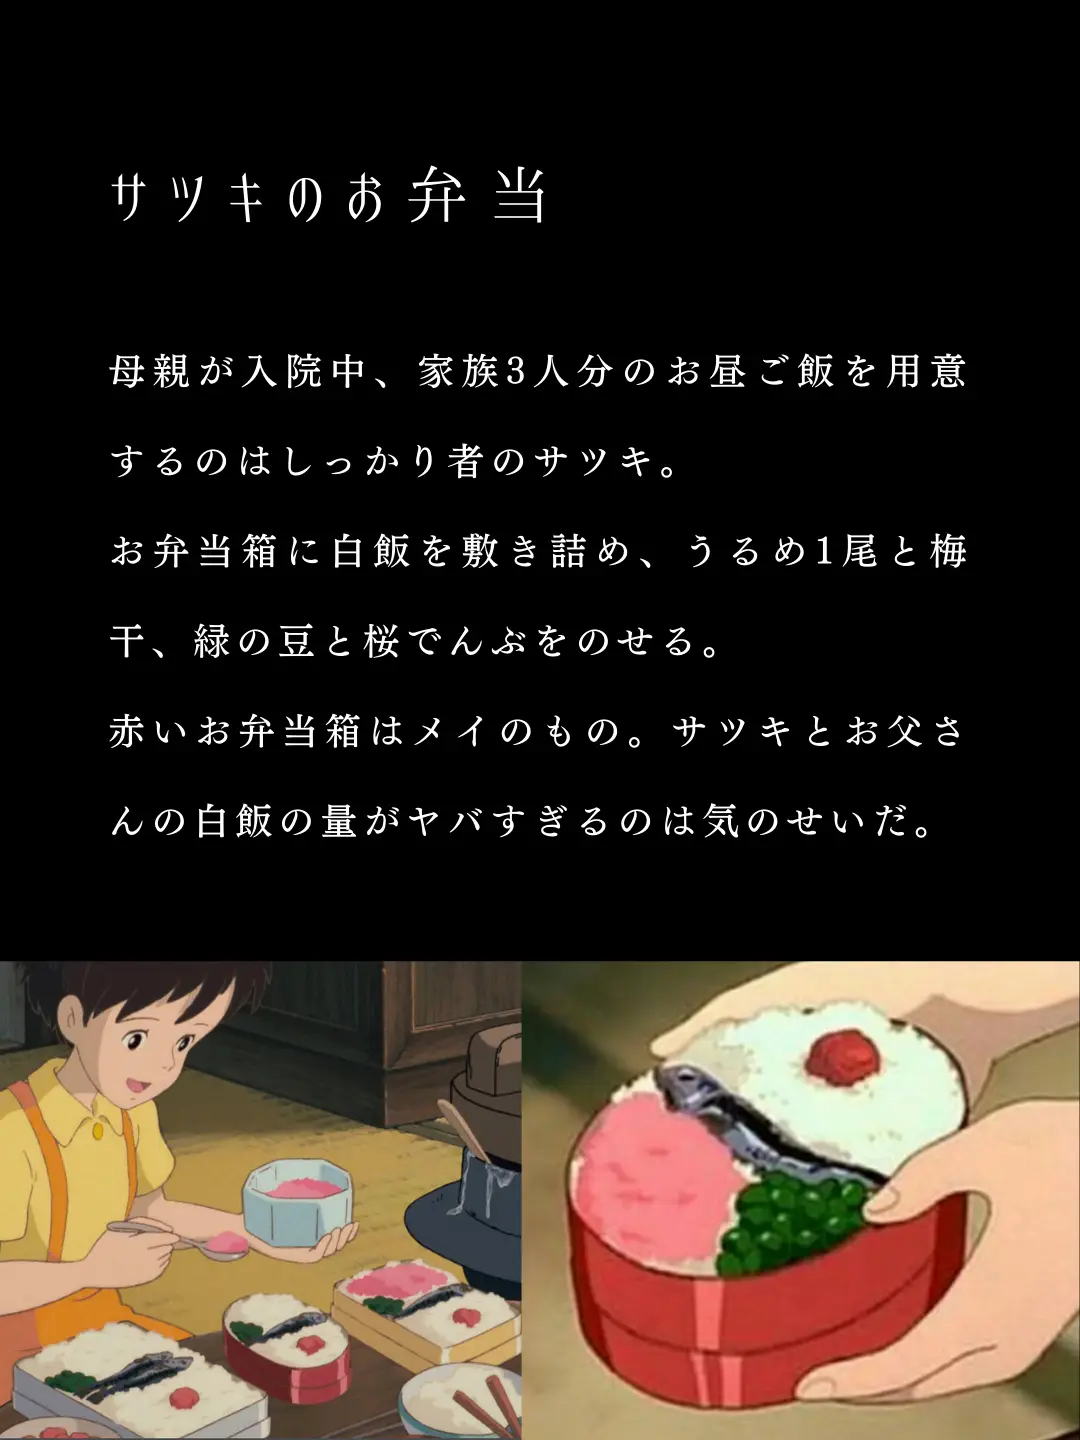 Satsuki's Bento from TOTORO! // Anime Eats 